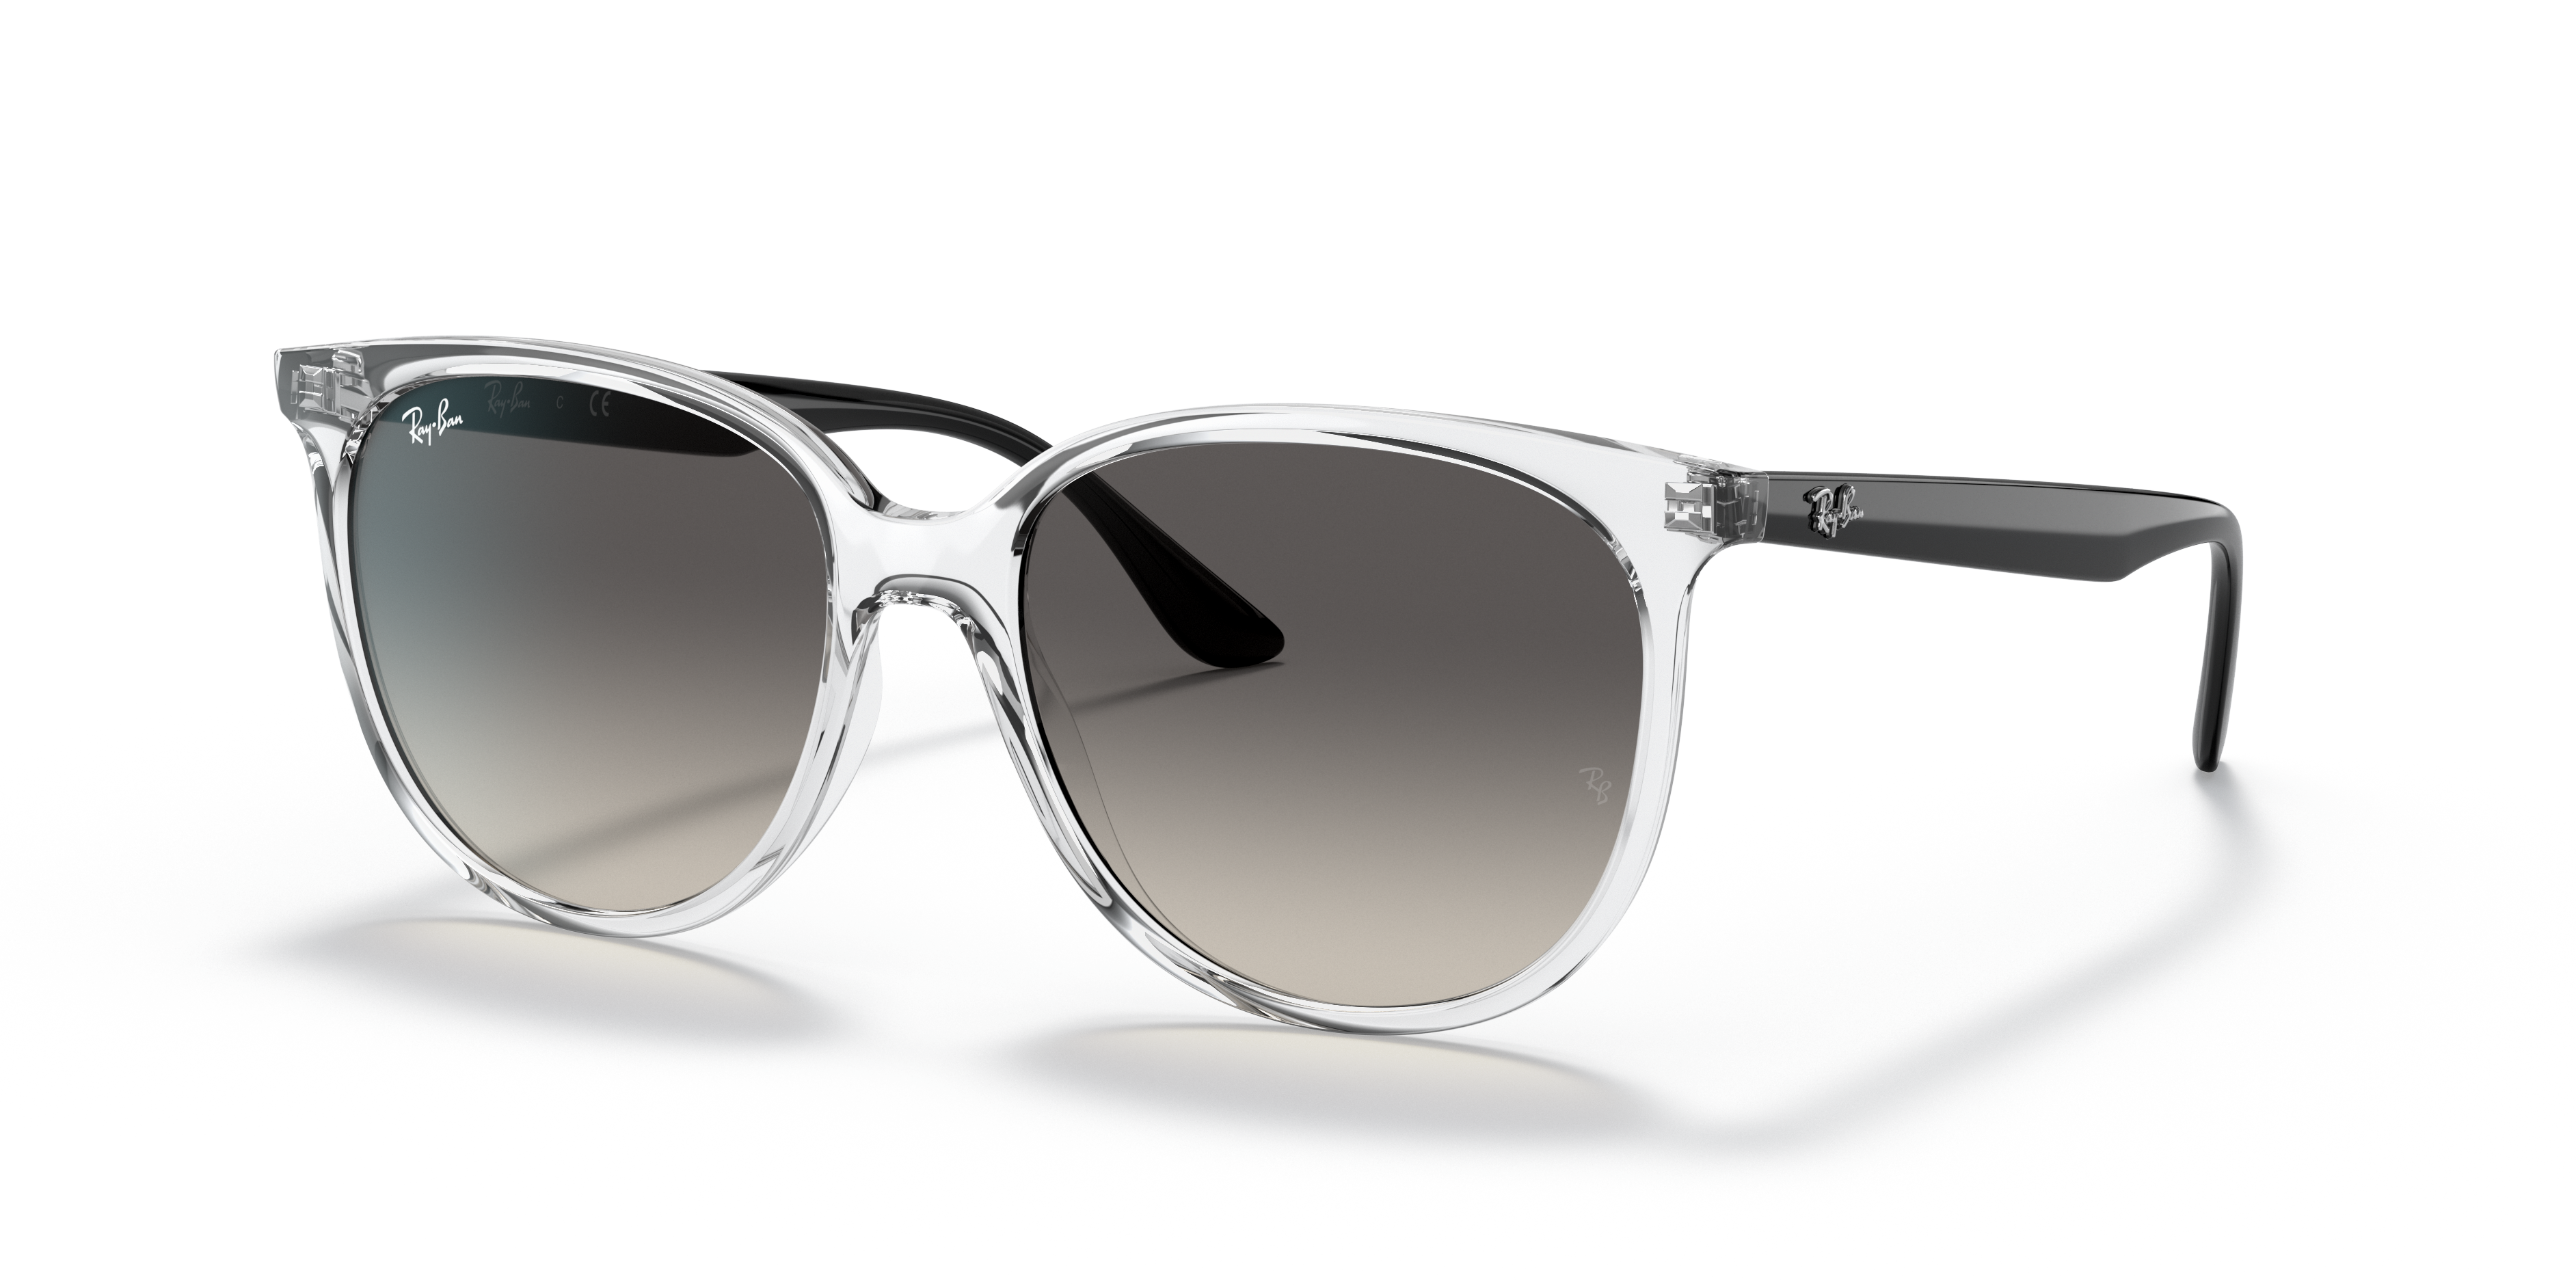 Sunglass Hut #sunglasses #fashionable #cool #eyewear #shades #store #staff # sunglasshut | Instagram